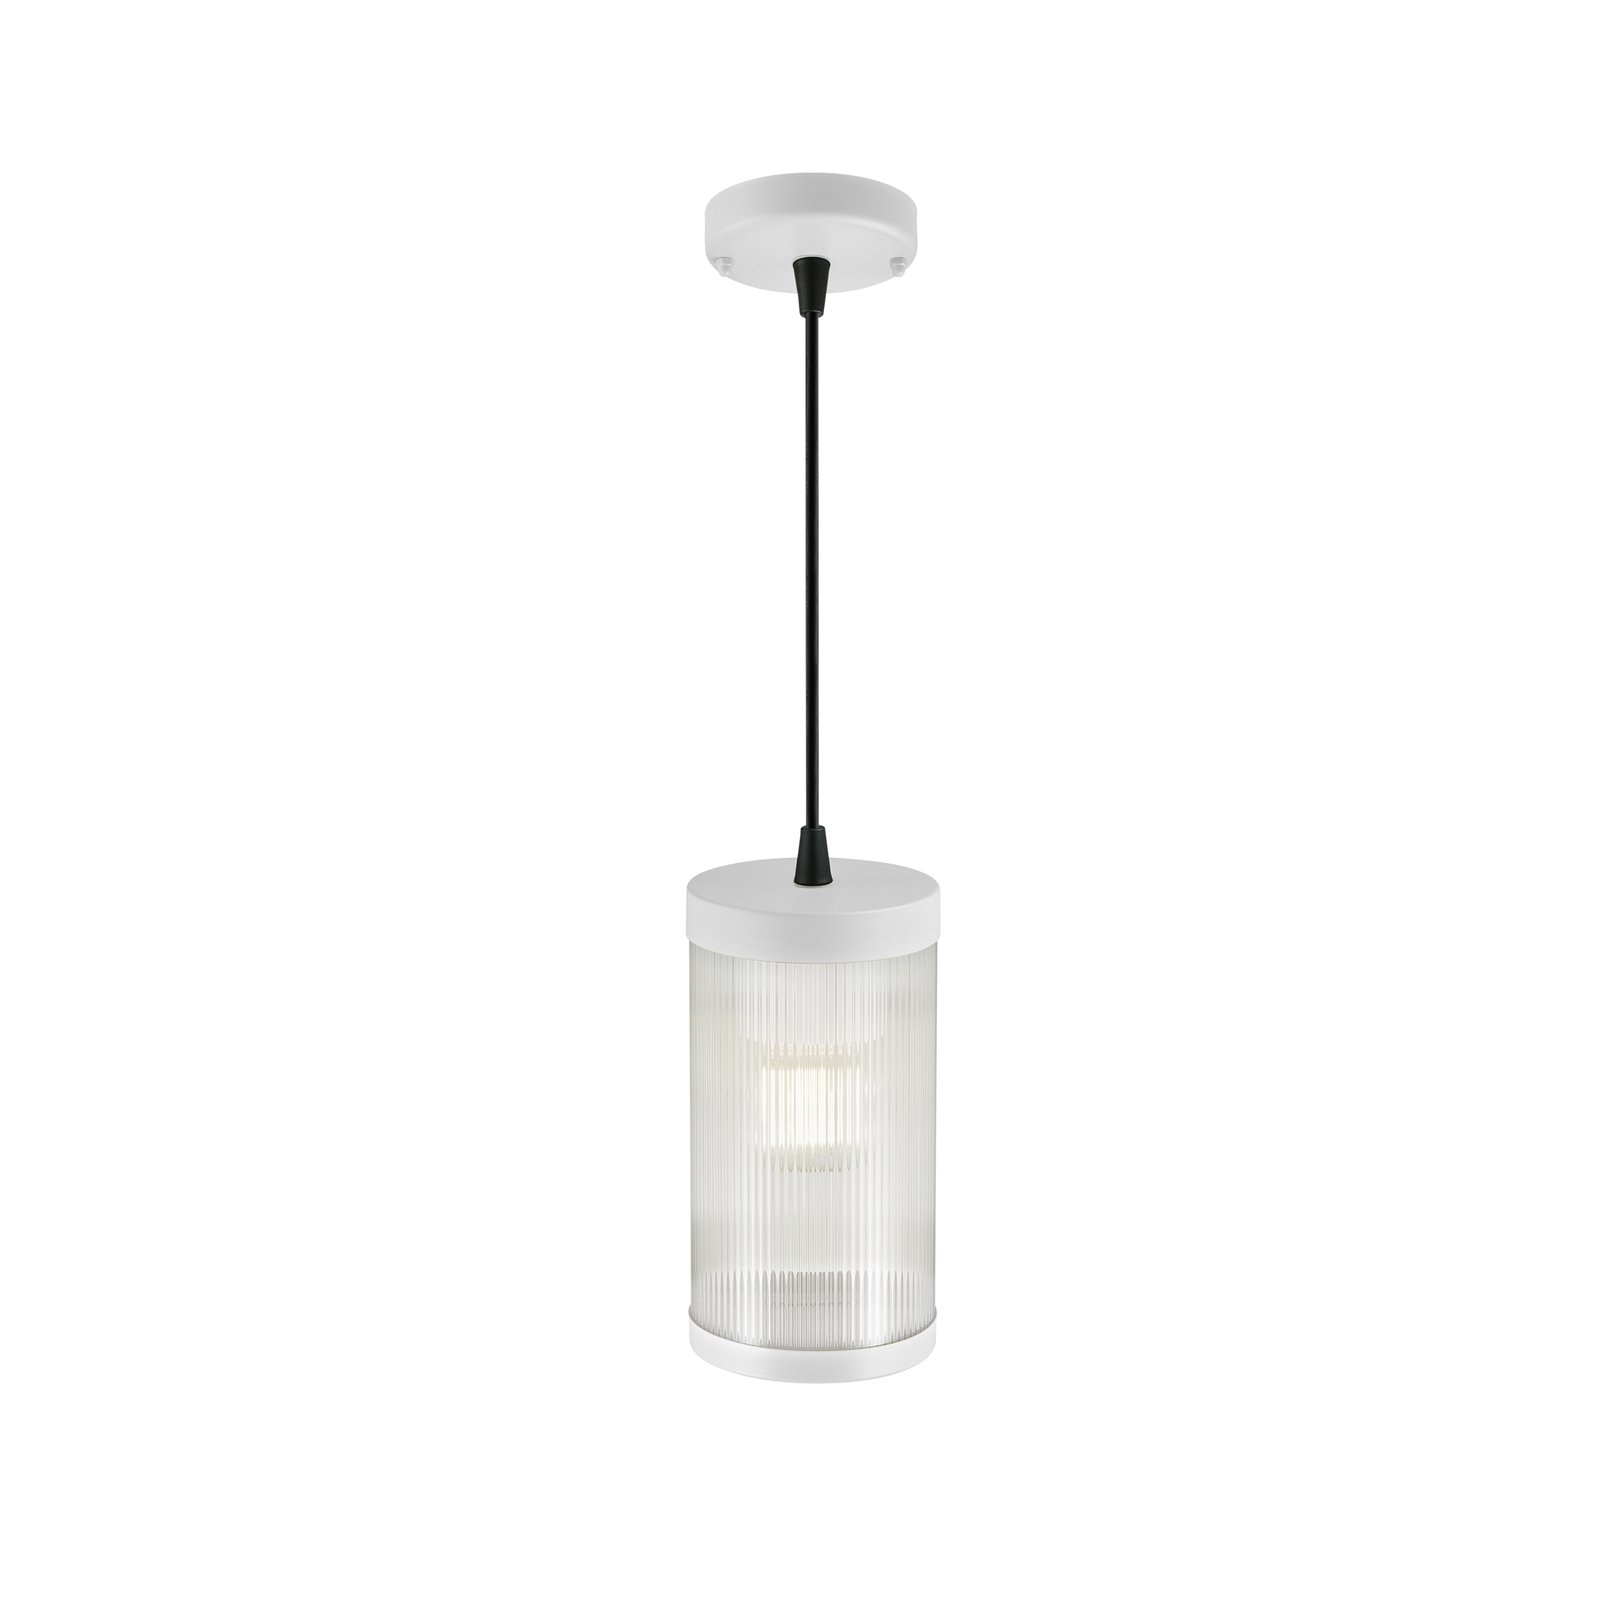 Coupar outdoor hanging light, Ø 13 cm, white